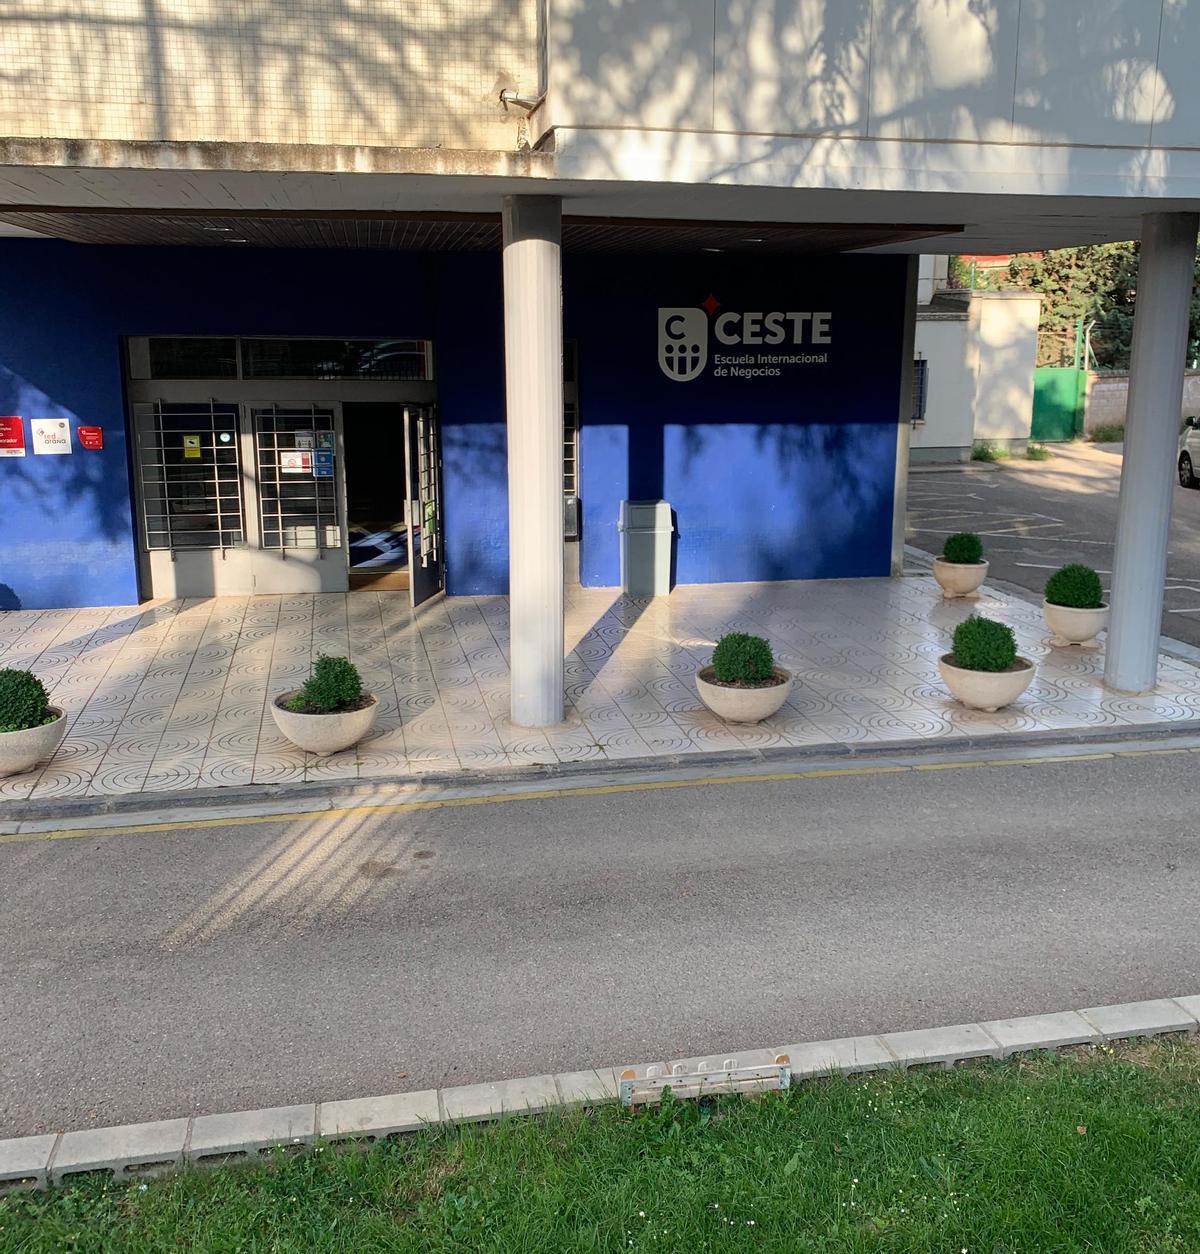 Entrada al edificio de CESTE, Escuela Internacional de Negocios.